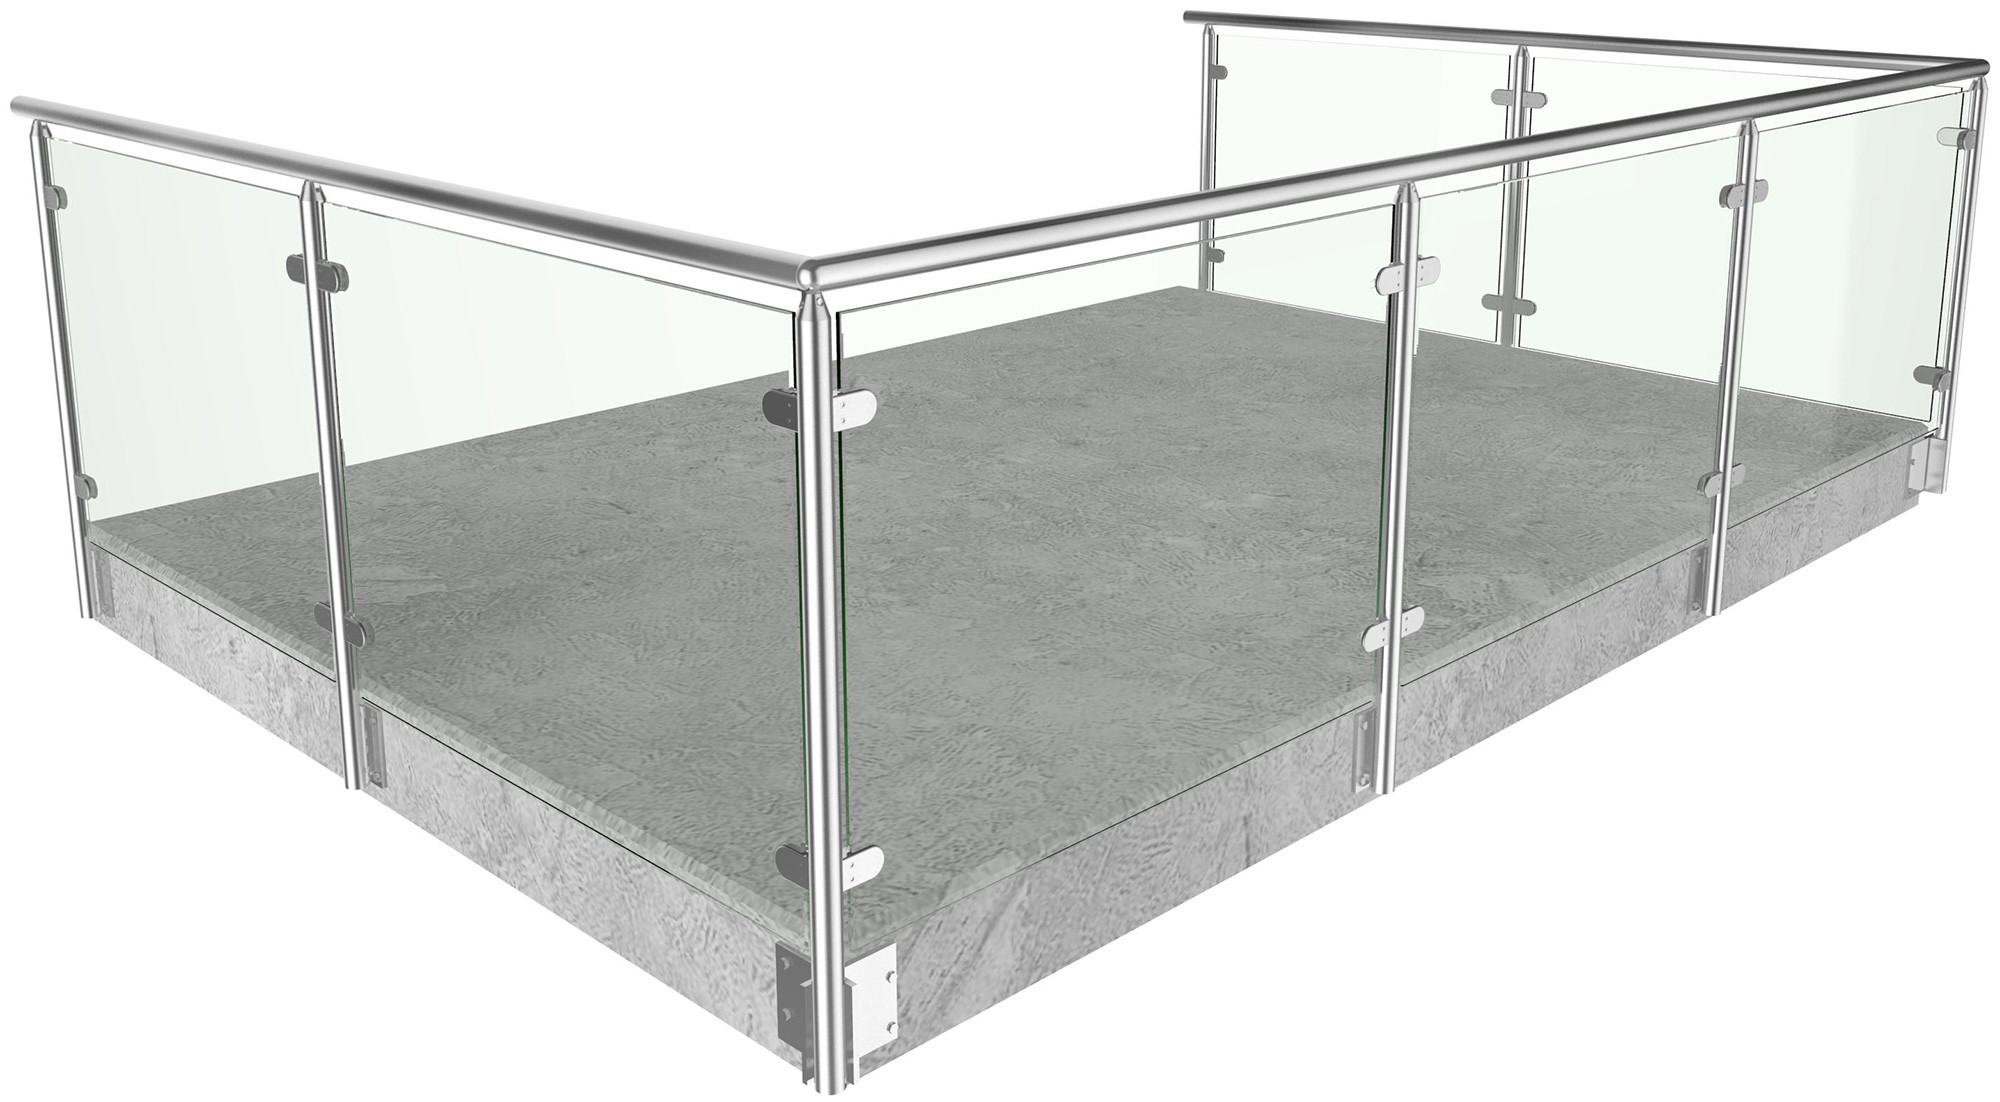 S-Cheap glass stair railingdeck railing/deck railing post attachment